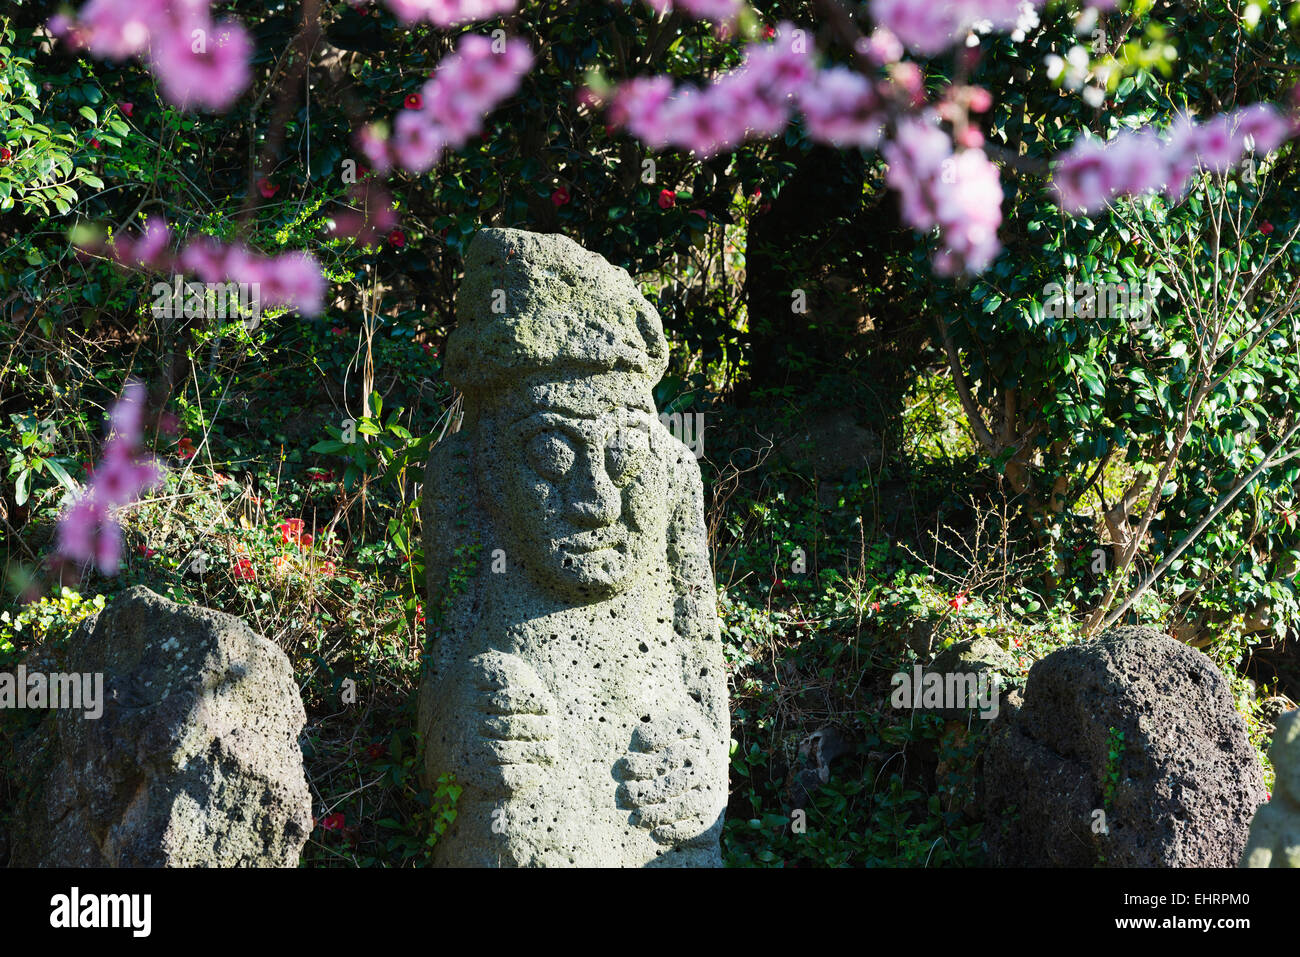 Asia, Repubblica di Corea, Corea del Sud, Jeju Island, Dol hareubang (harubang) protezione e furtility statua a Dolhareubang Park Foto Stock